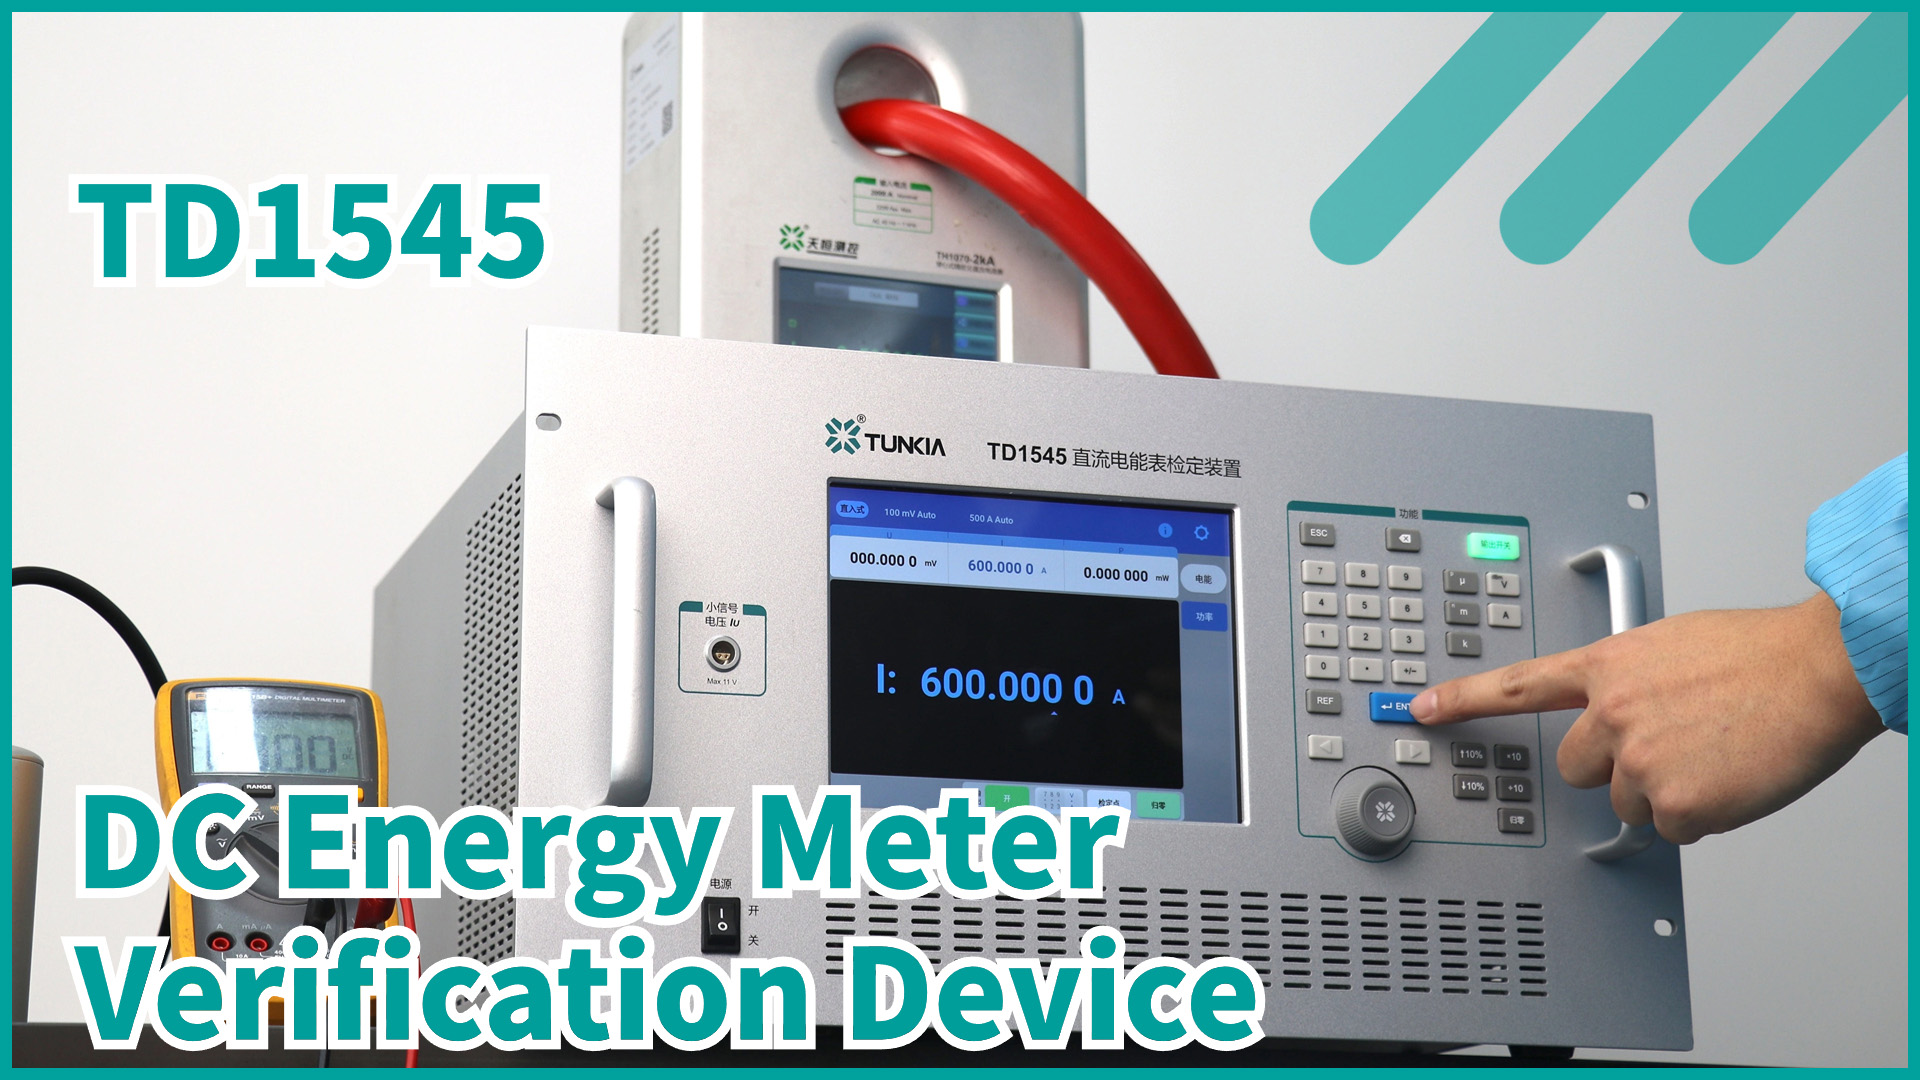 TD1545 DC Energy Meter Verification Device